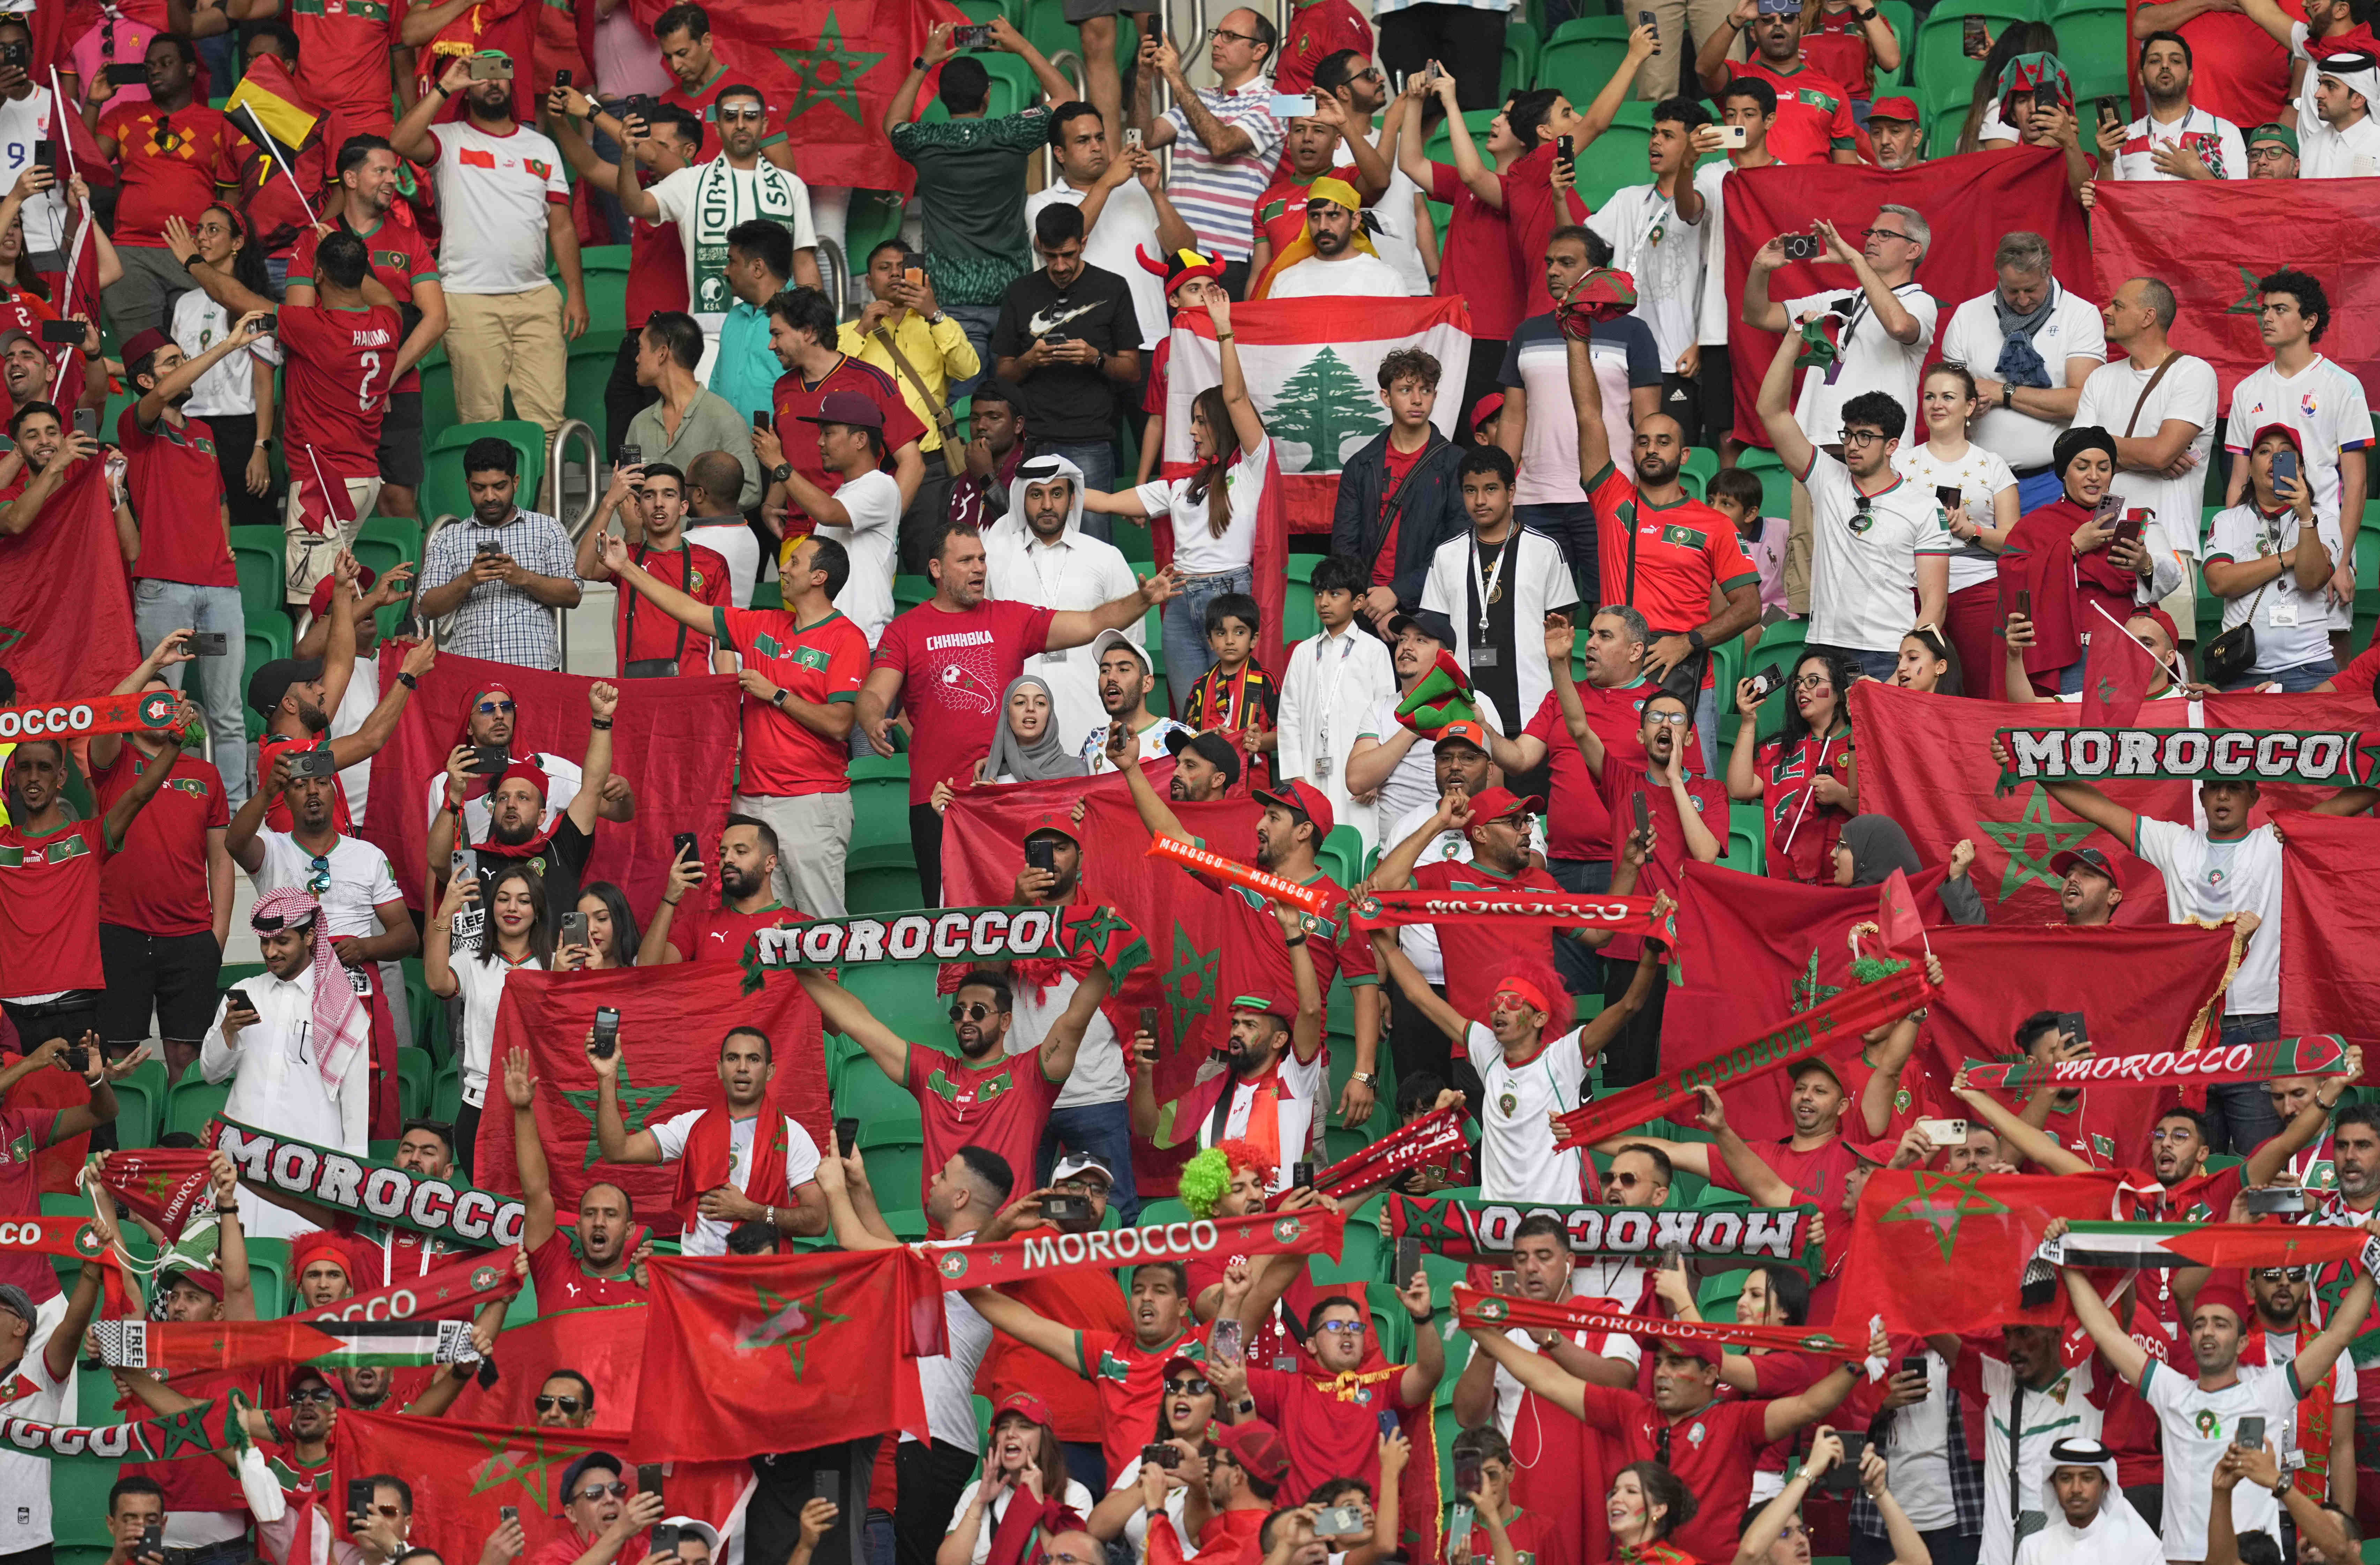 Qatar 2022 Arab fans unite after flurry of World Cup wins